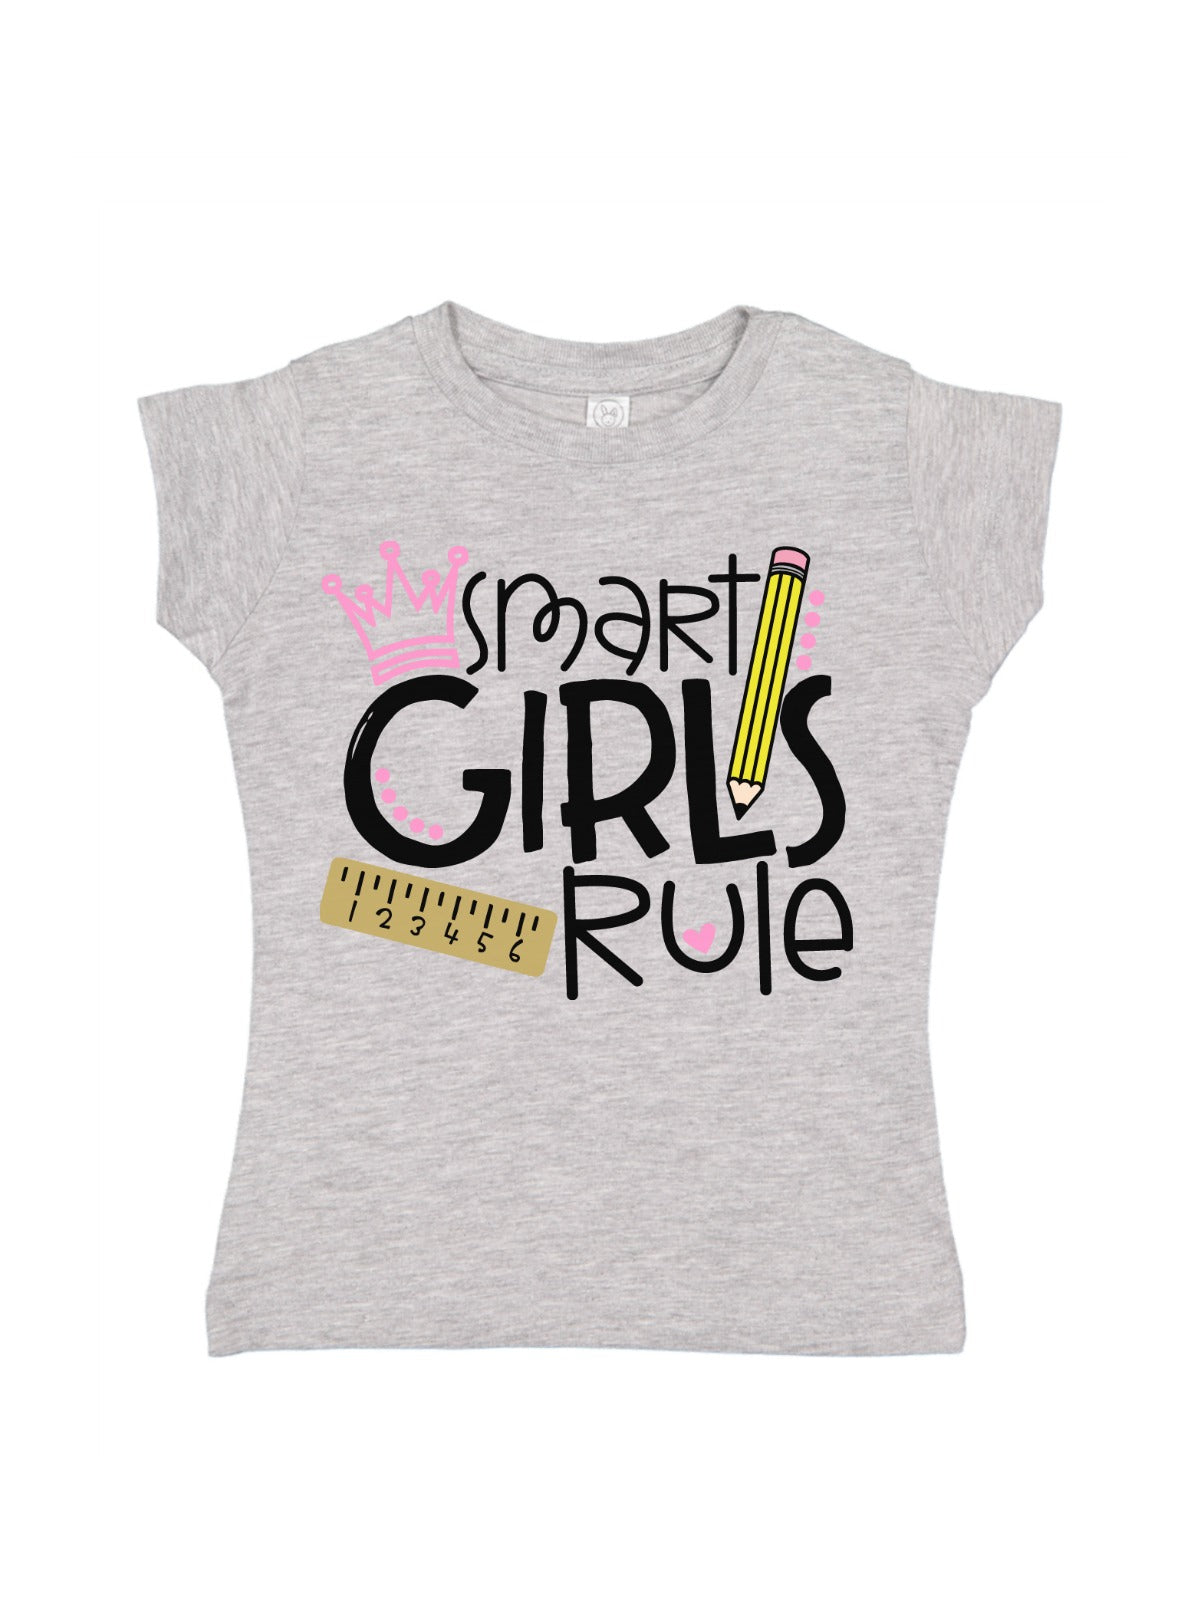 smart girls rule back to school shirt